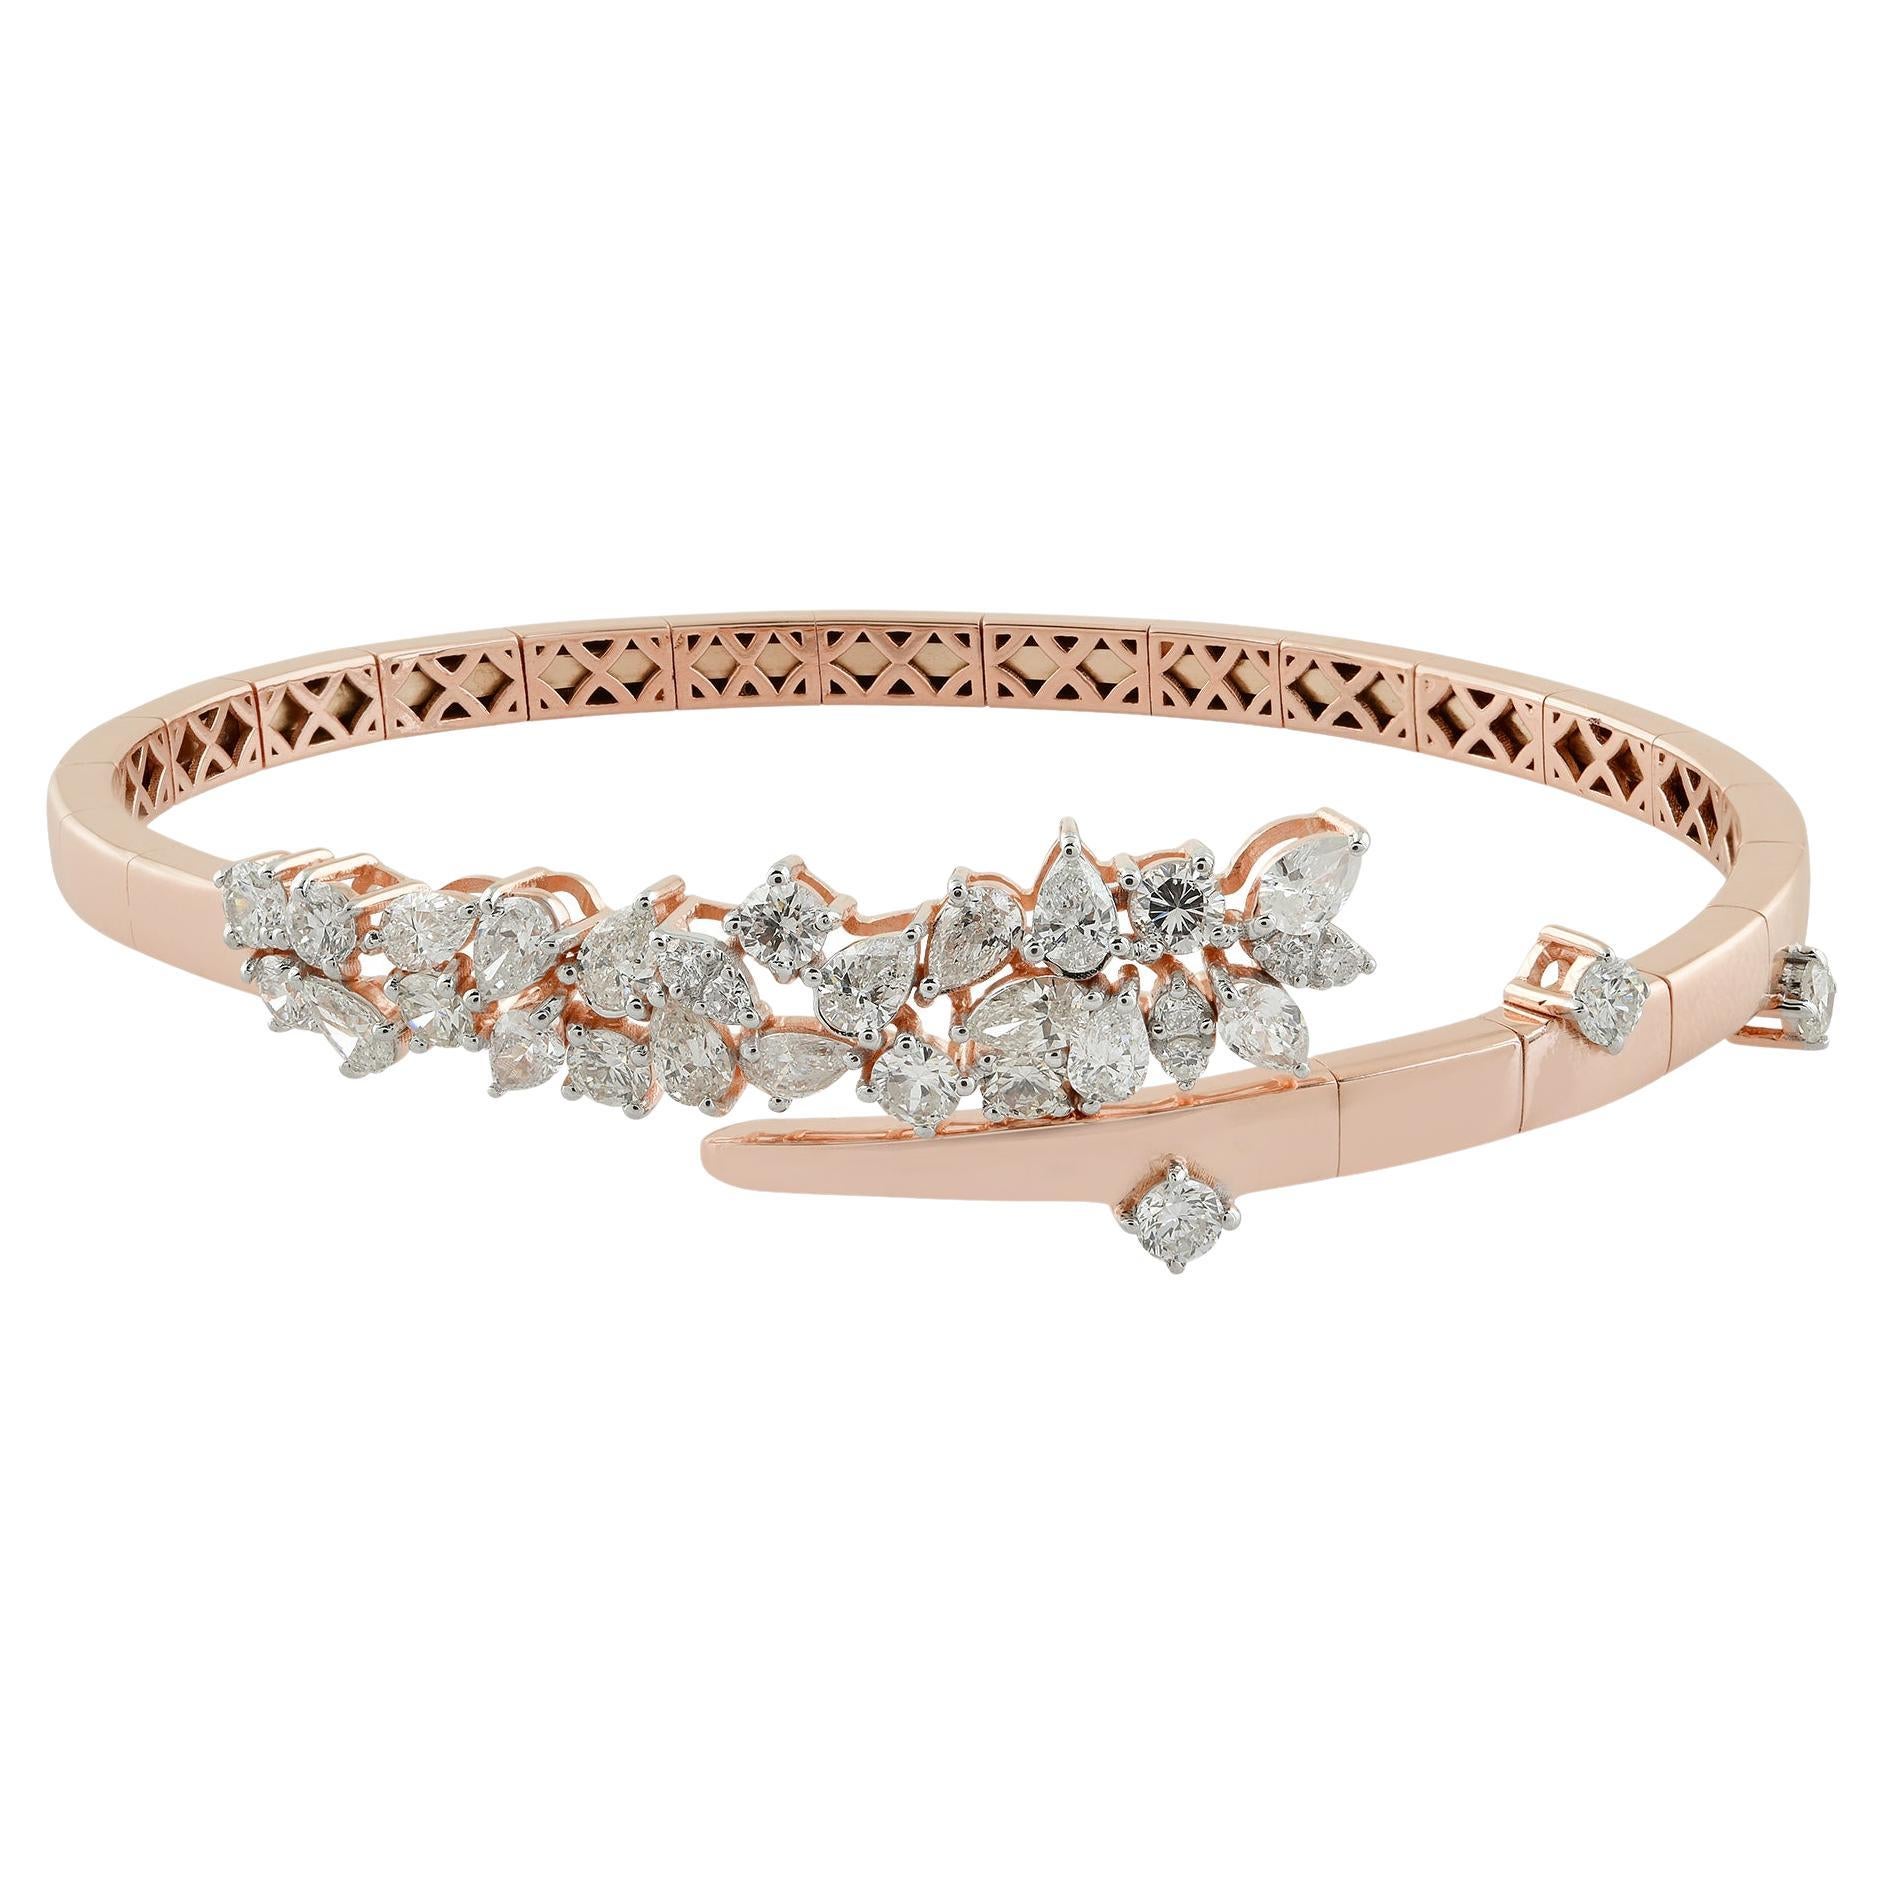 2.40 Carat SI Clarity HI Color Pear Diamond Wrap Bangle Bracelet 18k Rose Gold